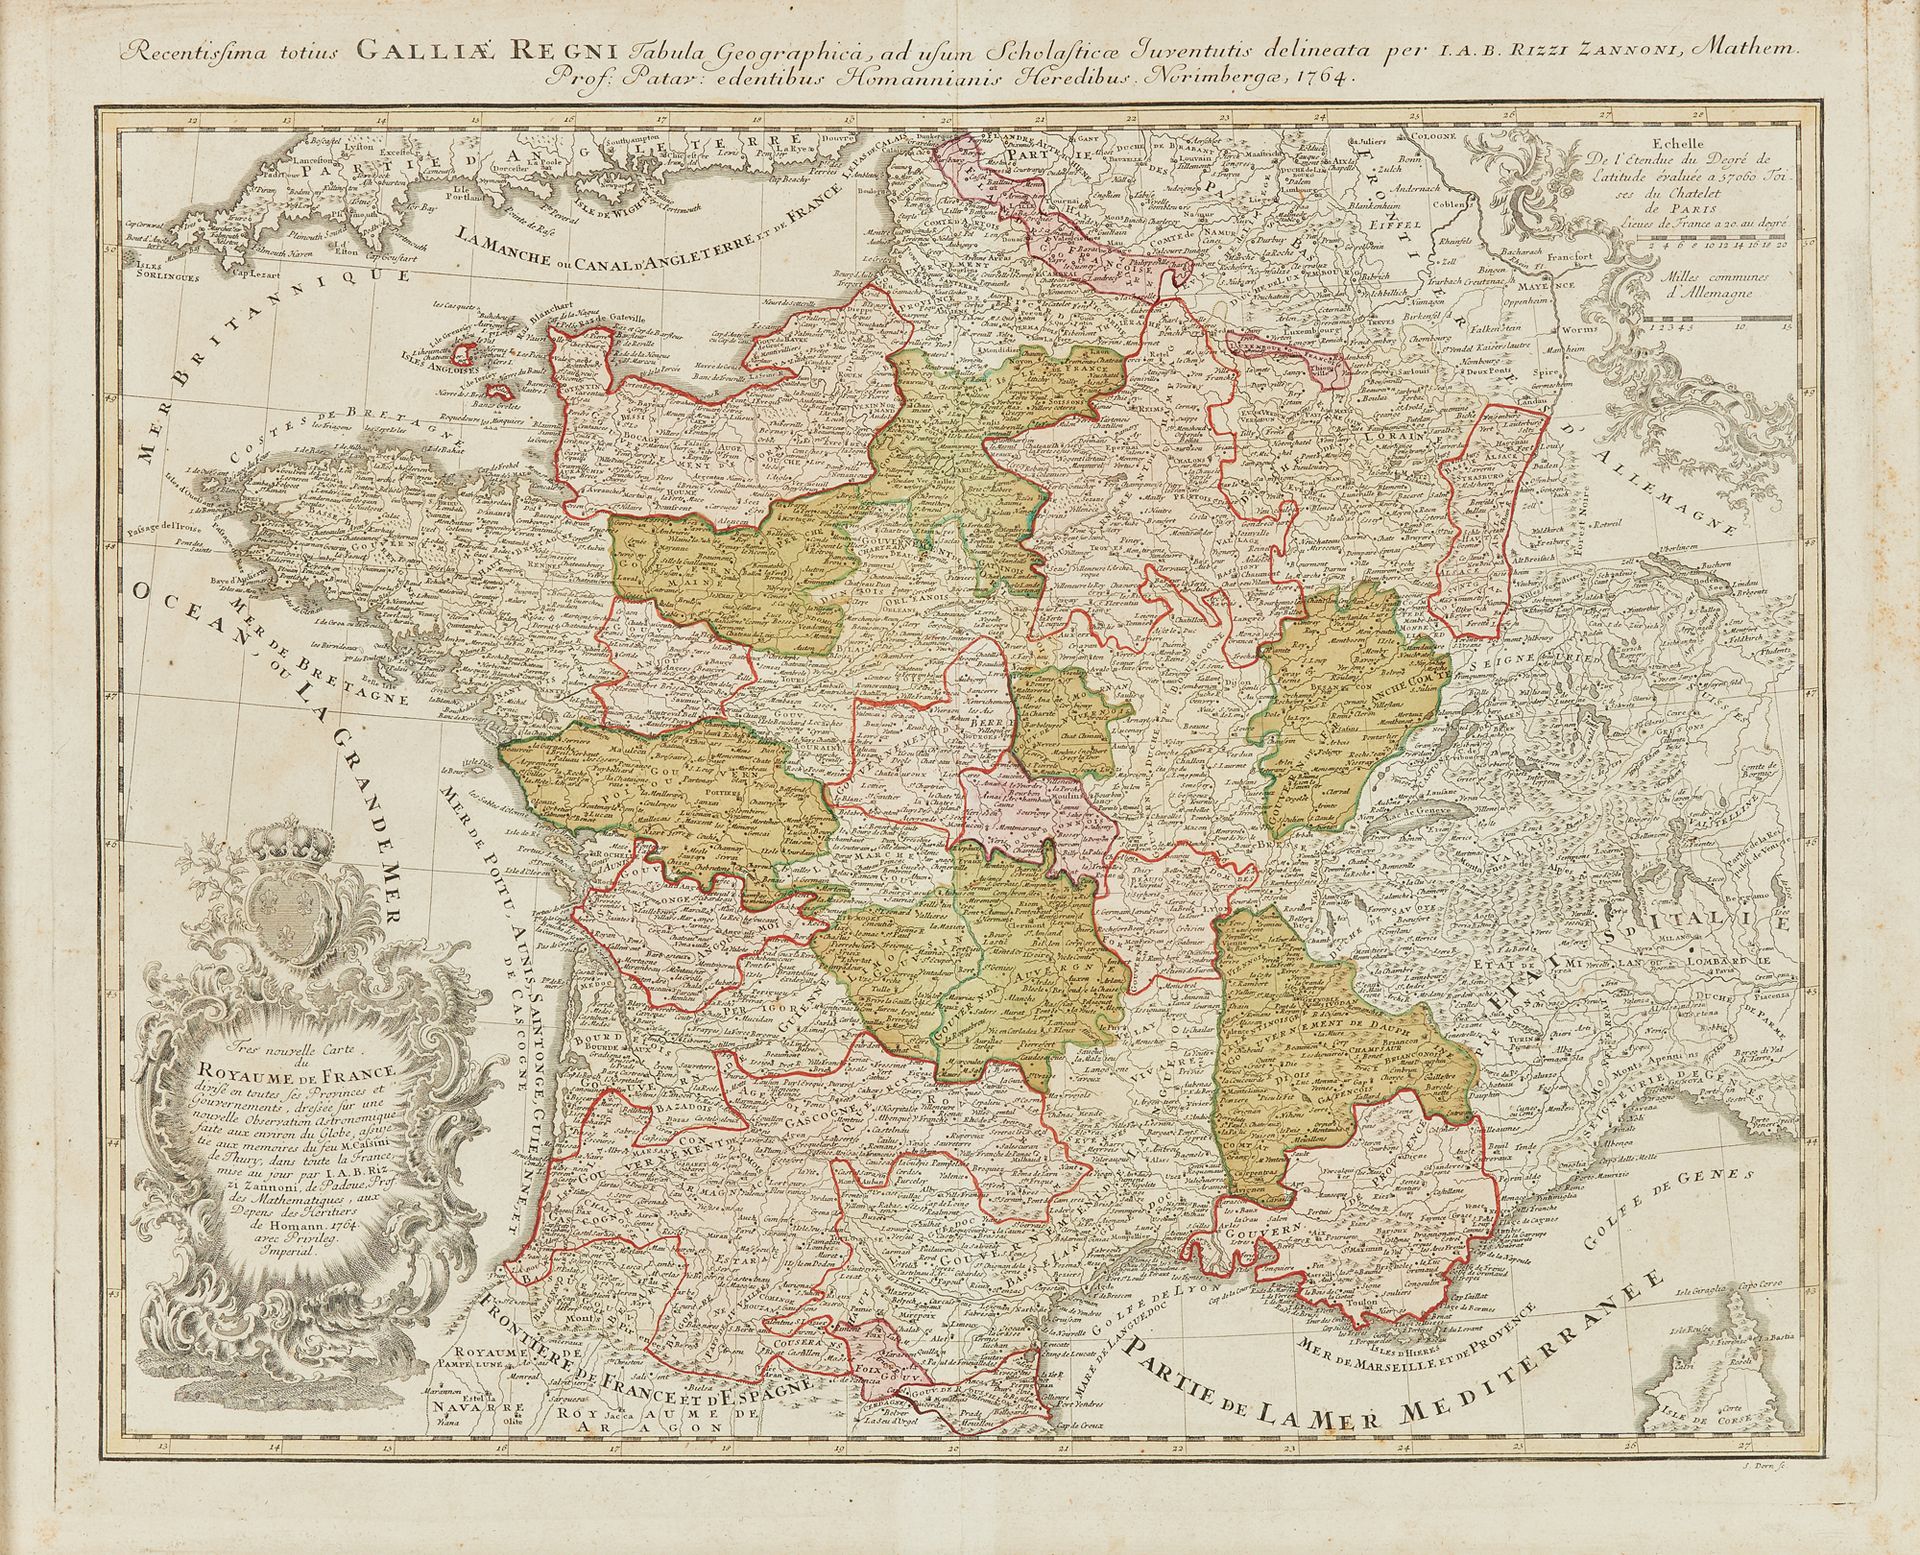 RIZZI ZANNONI 由霍曼继承人出资，划分为所有省份的法国地图。日期为1764年
48 x 56 cm